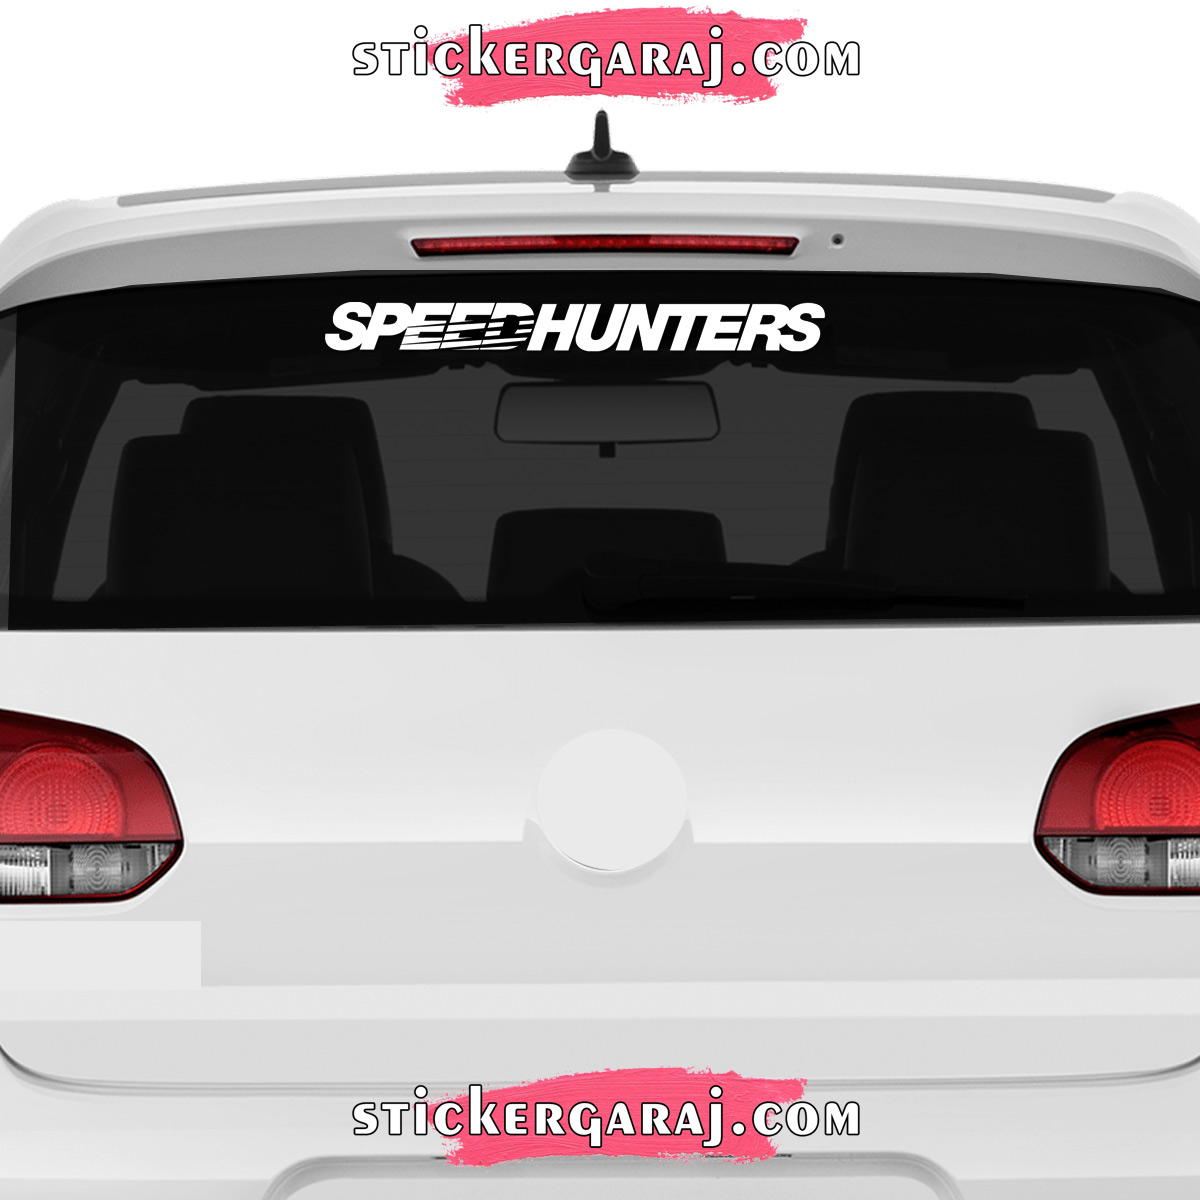 Honda cam sticker - Honda cam sticker - speedhunters